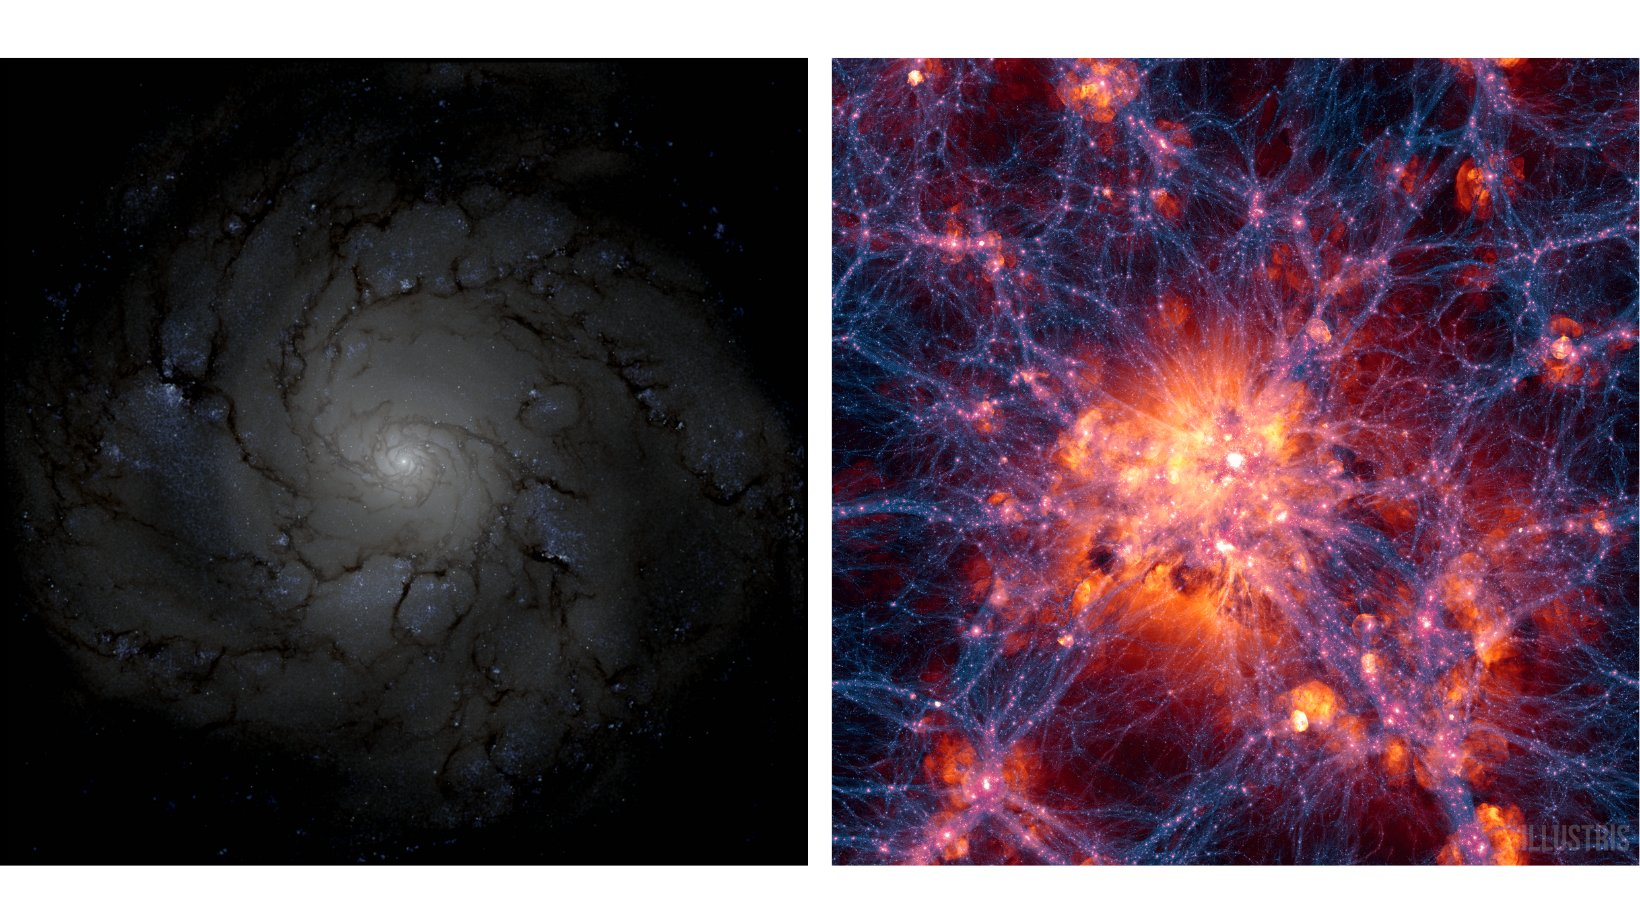 Milky Way Analog Image with gas and shocks